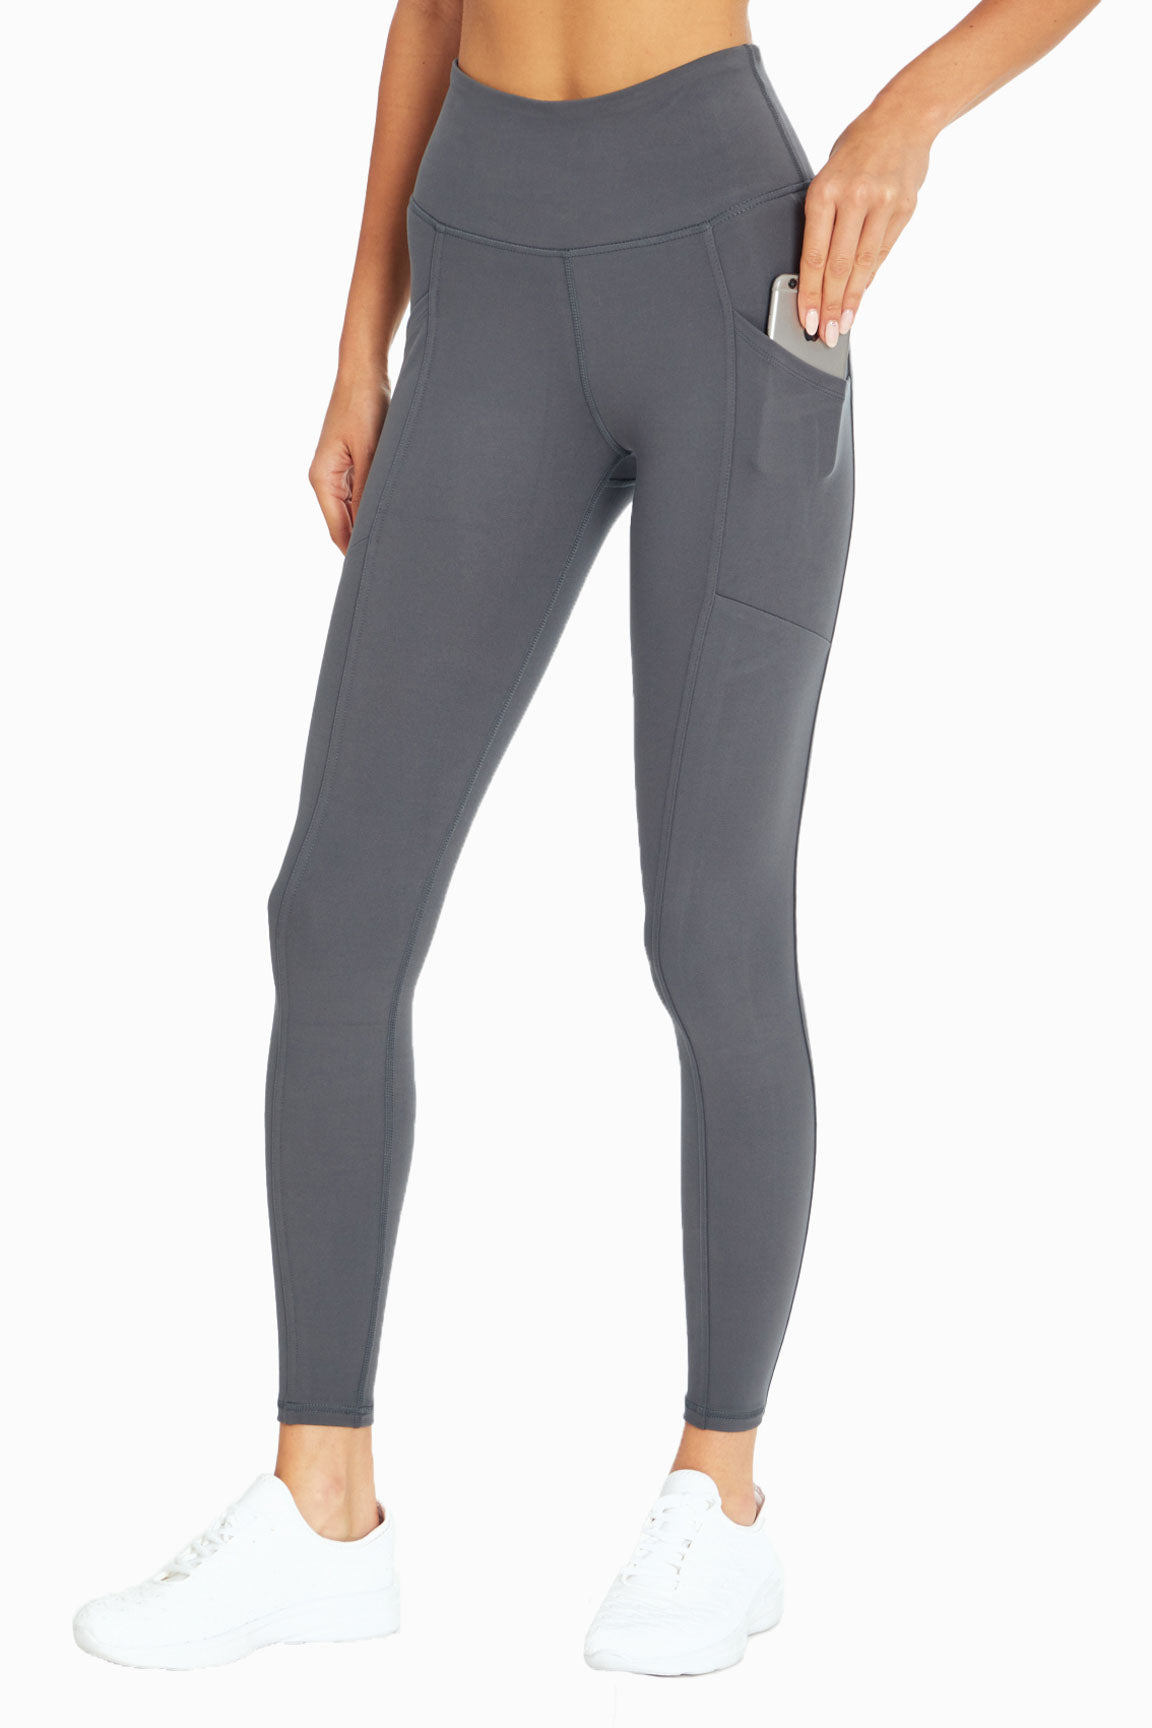 Marika Gray Active Pants Size 2X (Plus) - 56% off